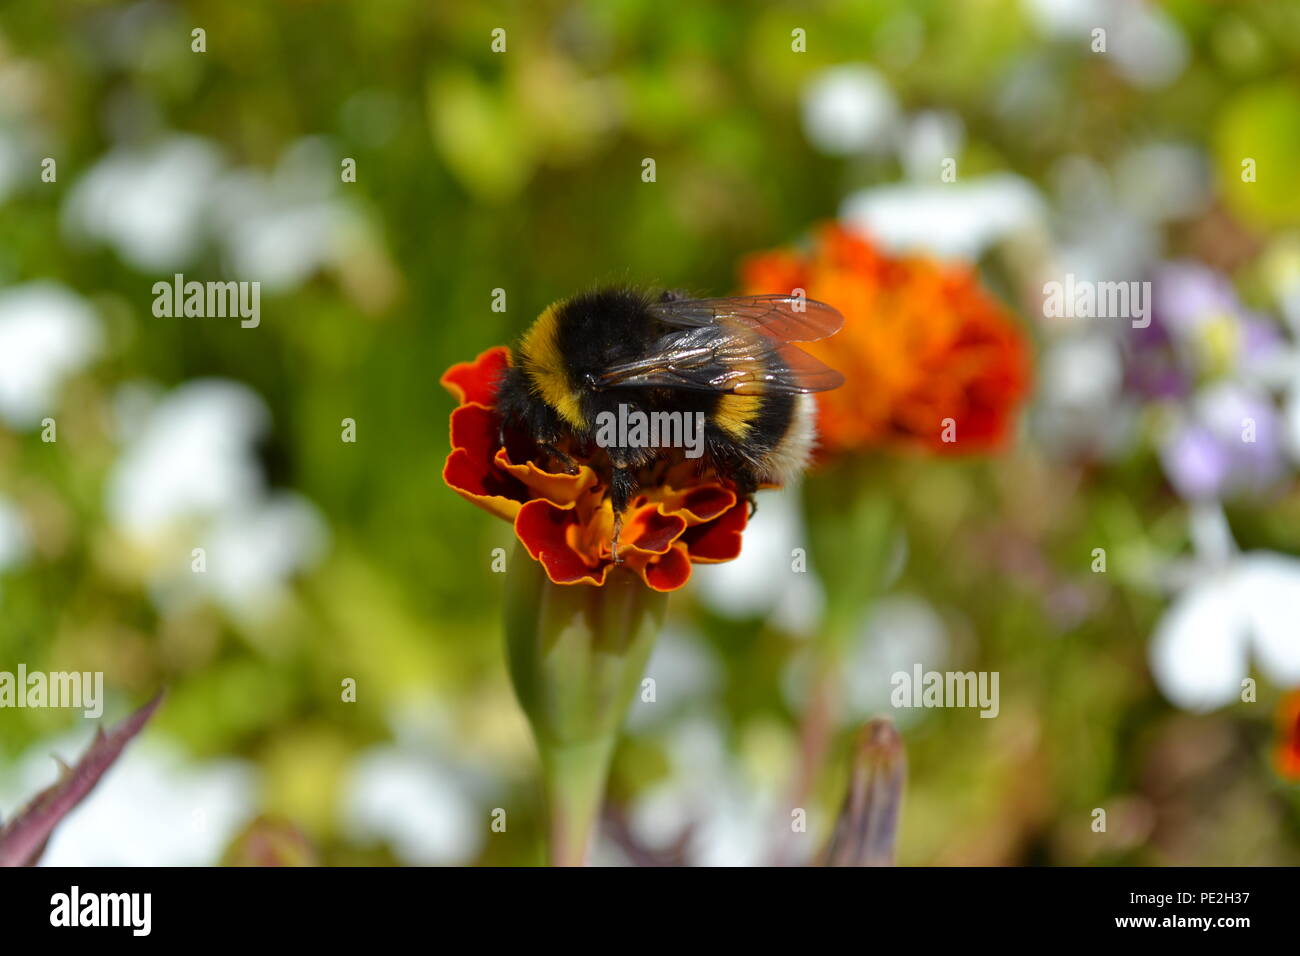 A bumble-bee enjoying the summer sun in Stockton, Teesside. Stock Photo